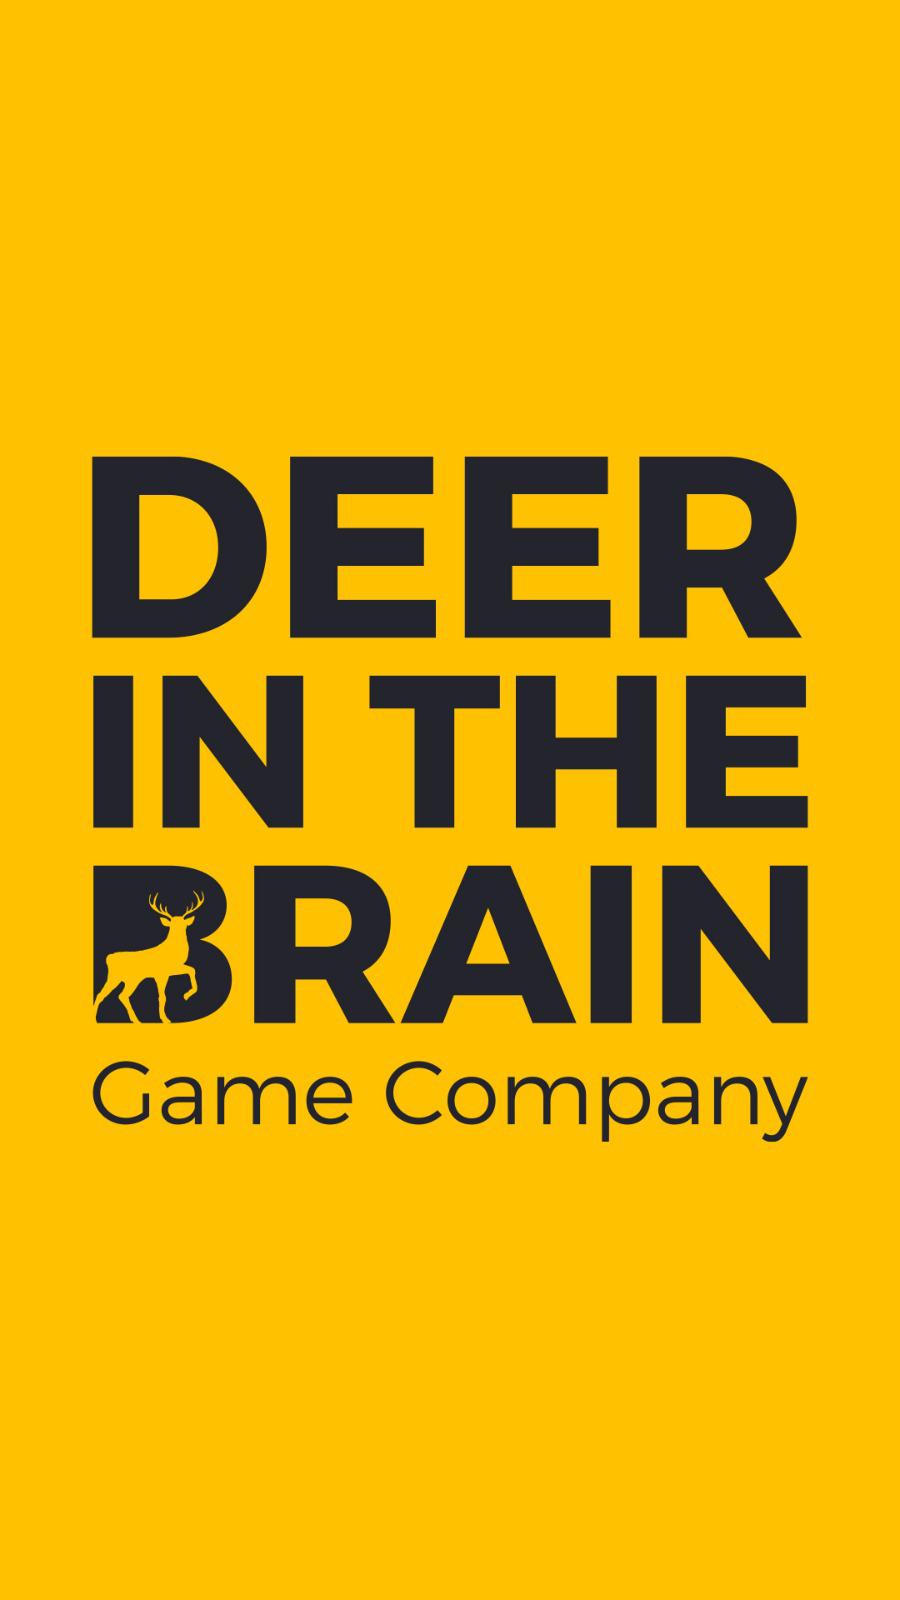 Deer in the Brain Logo